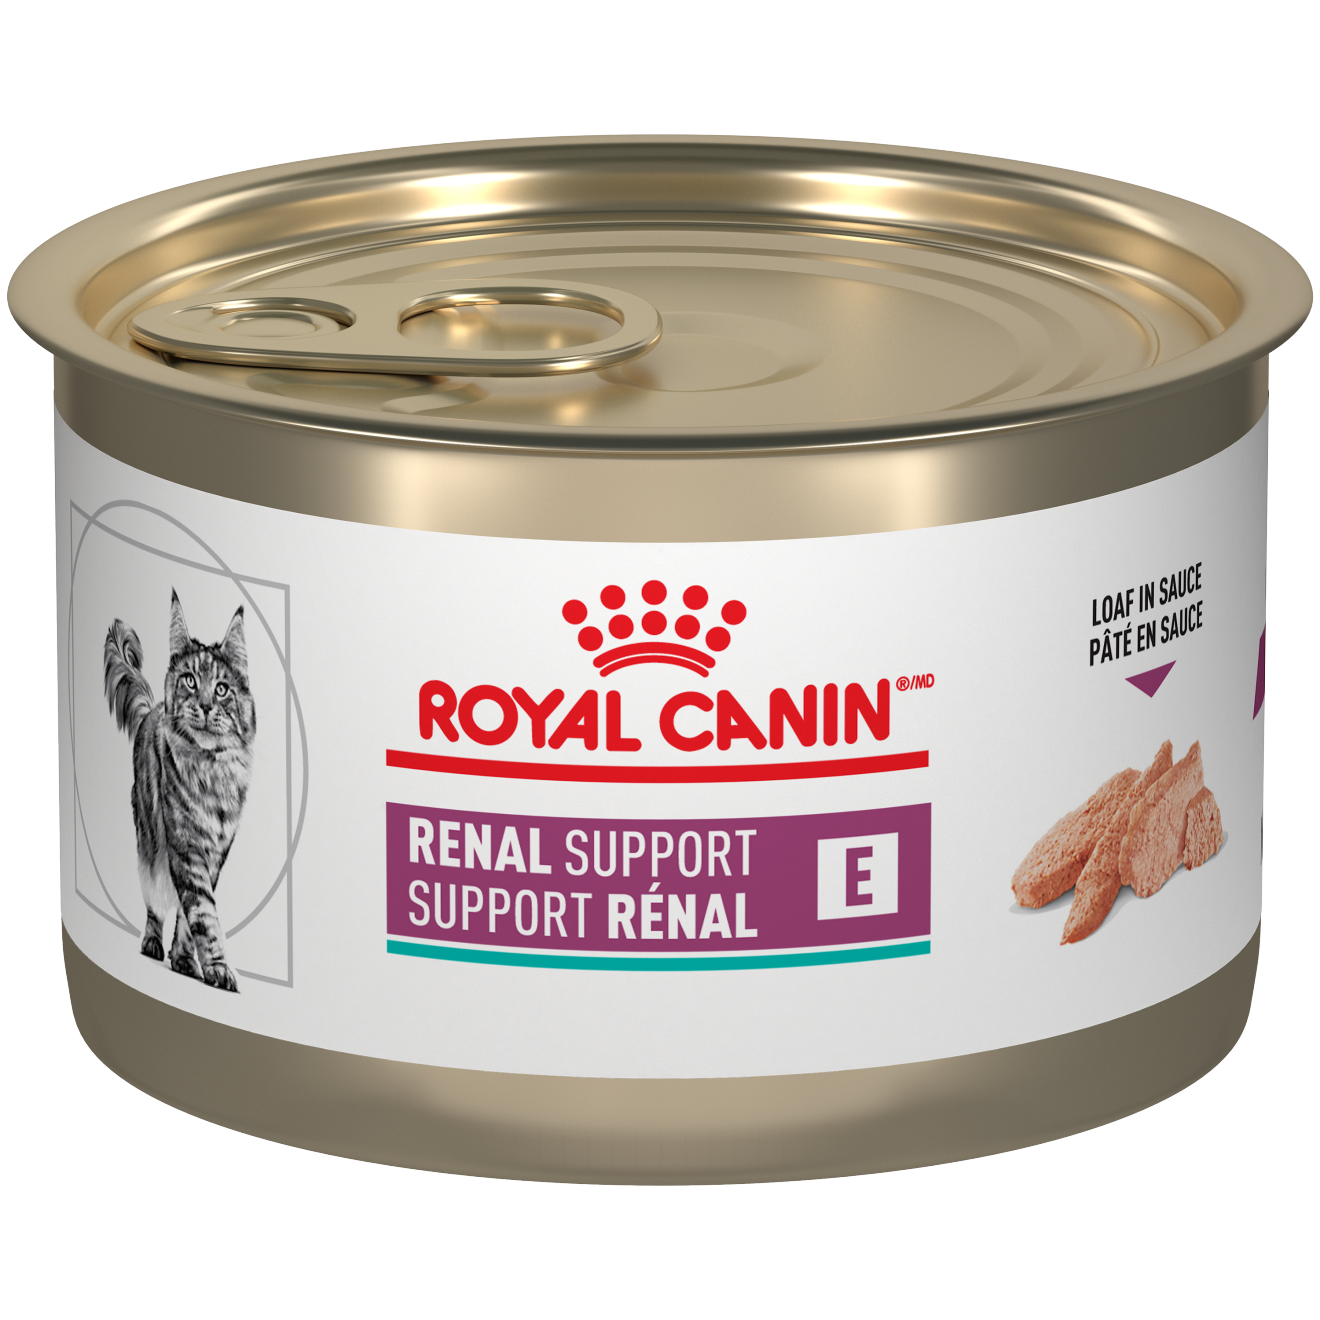 Feline Renal Support E loaf in sauce